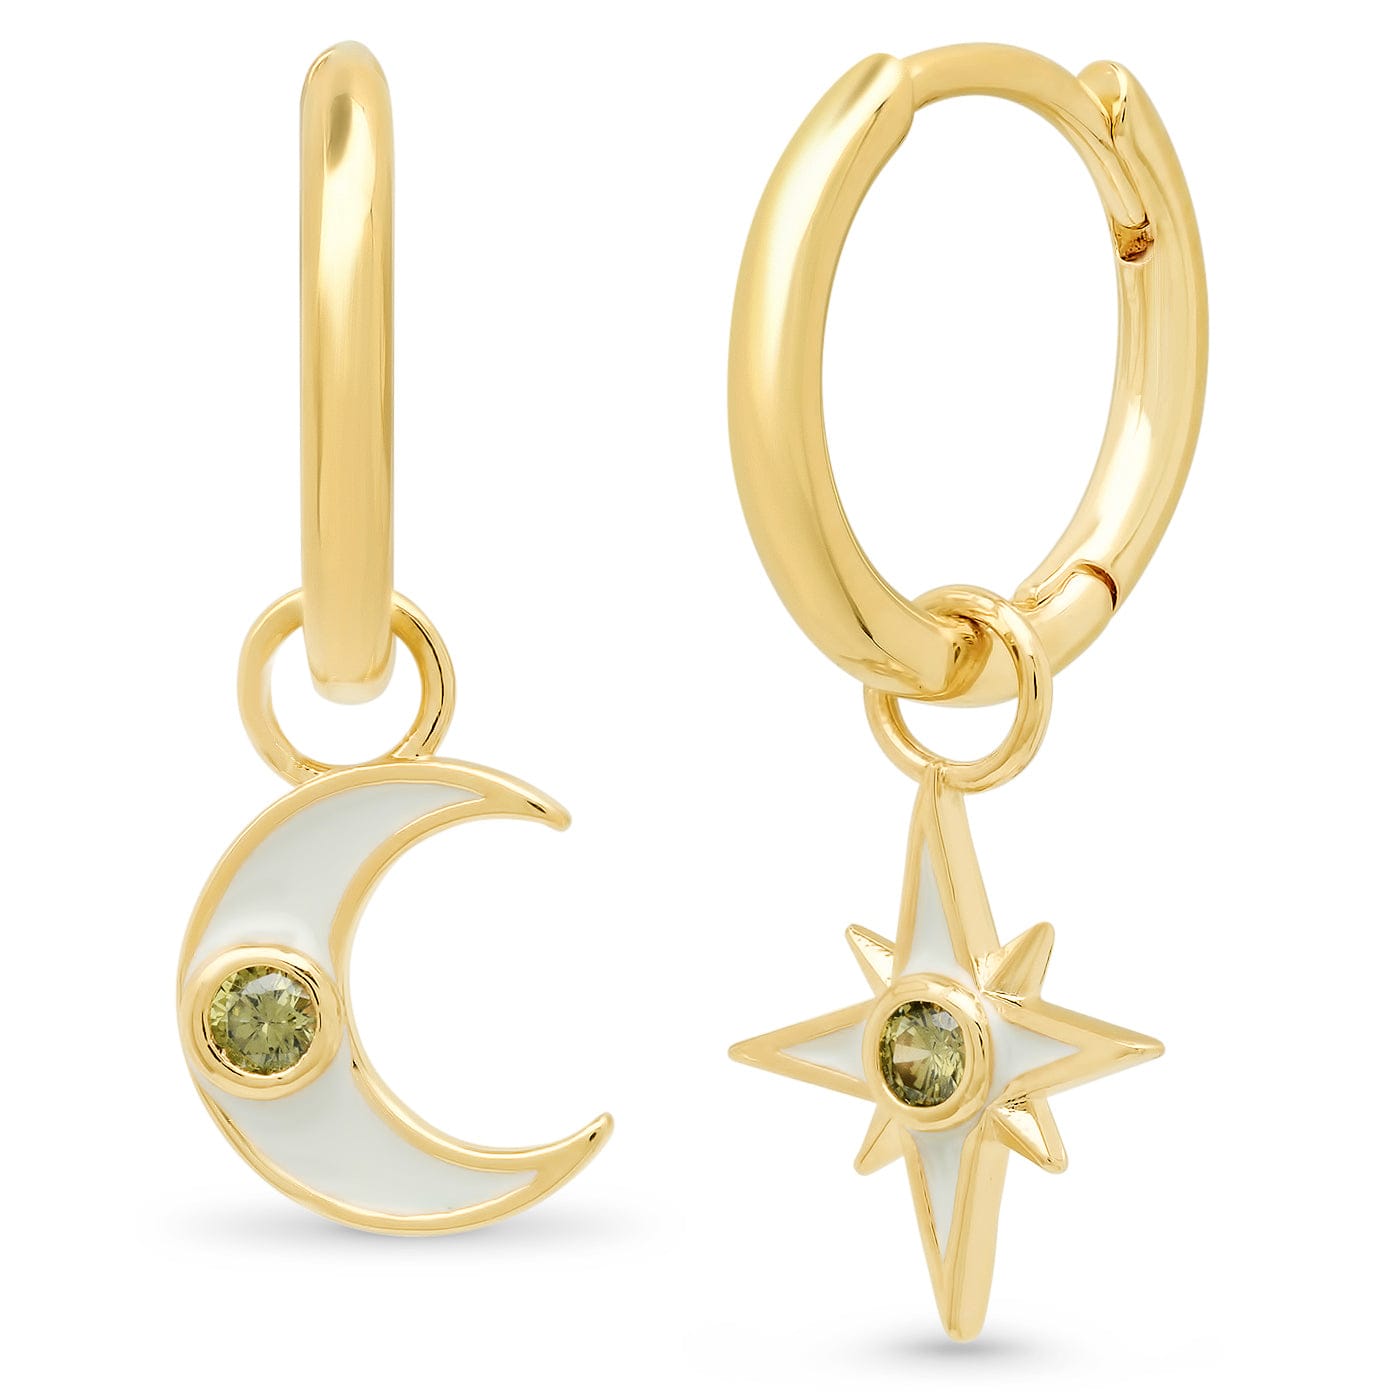 TAI JEWELRY Earrings Celestial Mismatched Charm Dangle Hoops